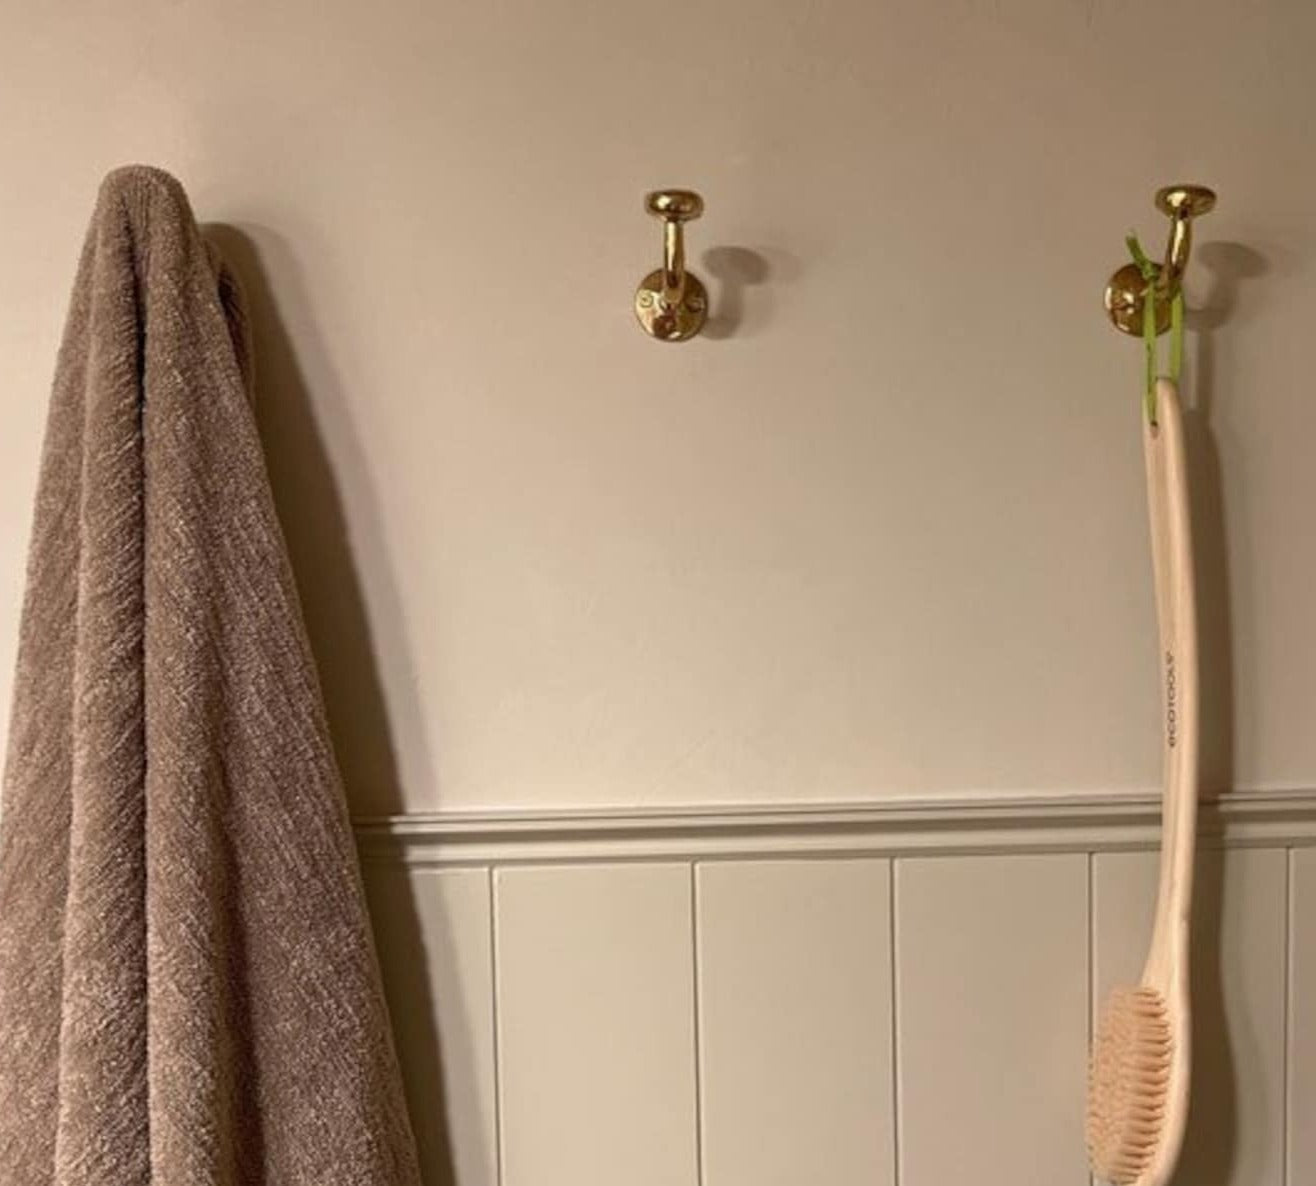 Handracfted Brass Bathroom Hooks, Coat Hooks Rustic Wall Mounted